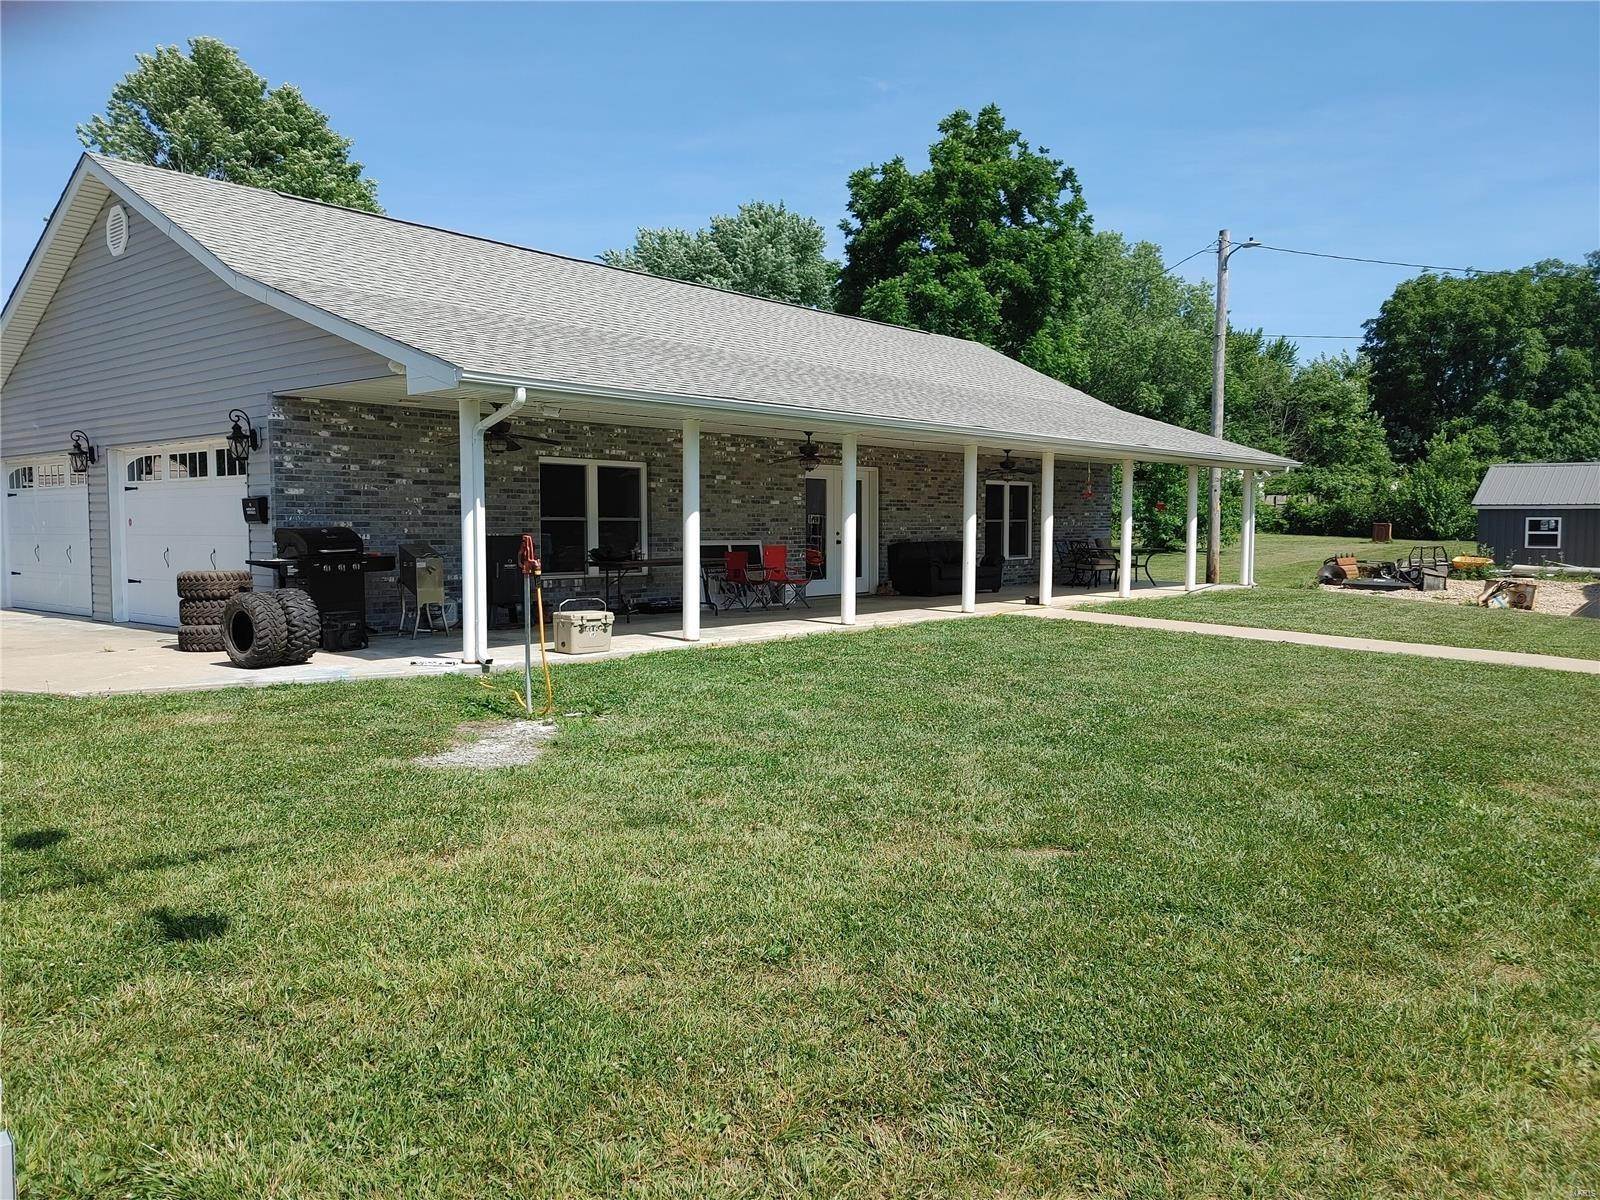 Property for Sale at 112 N Mccune Pilot Knob, Missouri 63663 United States